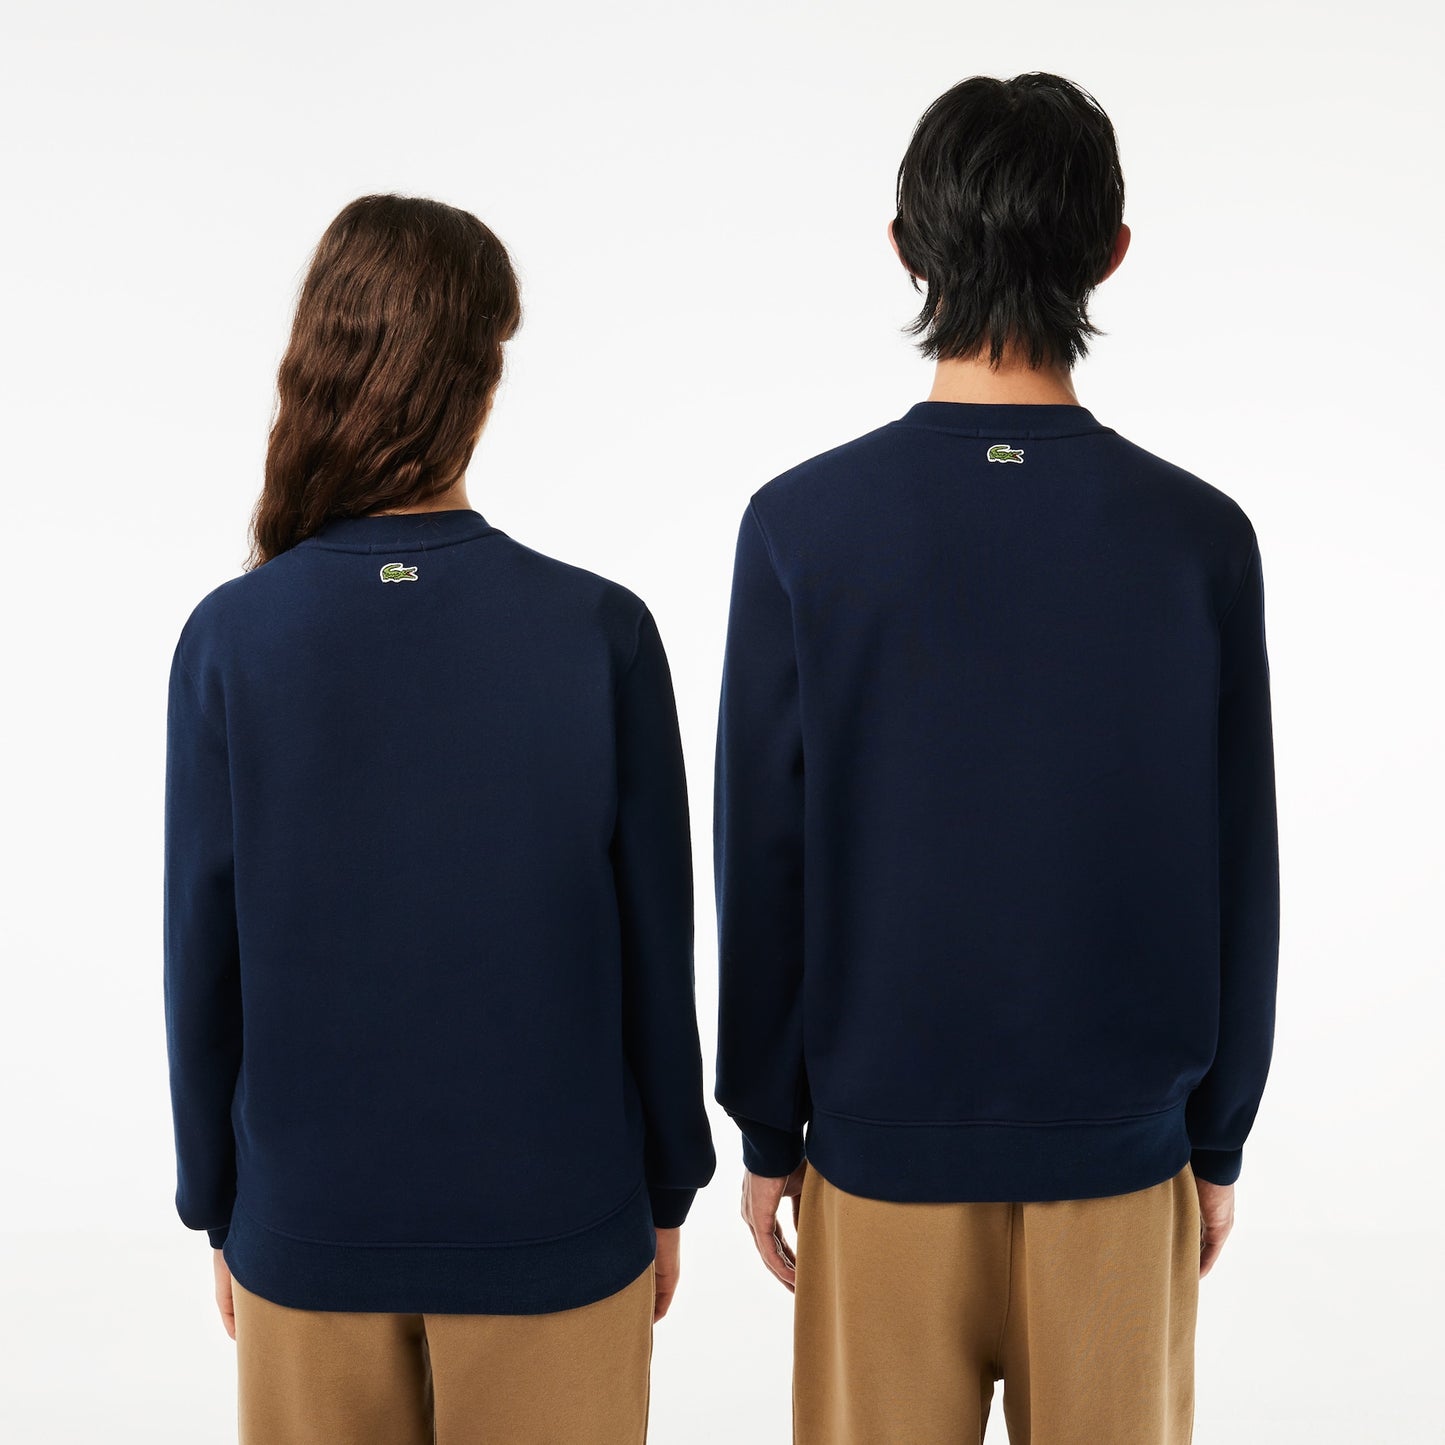 Lacoste - Cotton Fleece Branded Jogging Sweatshirt - Navy Blue